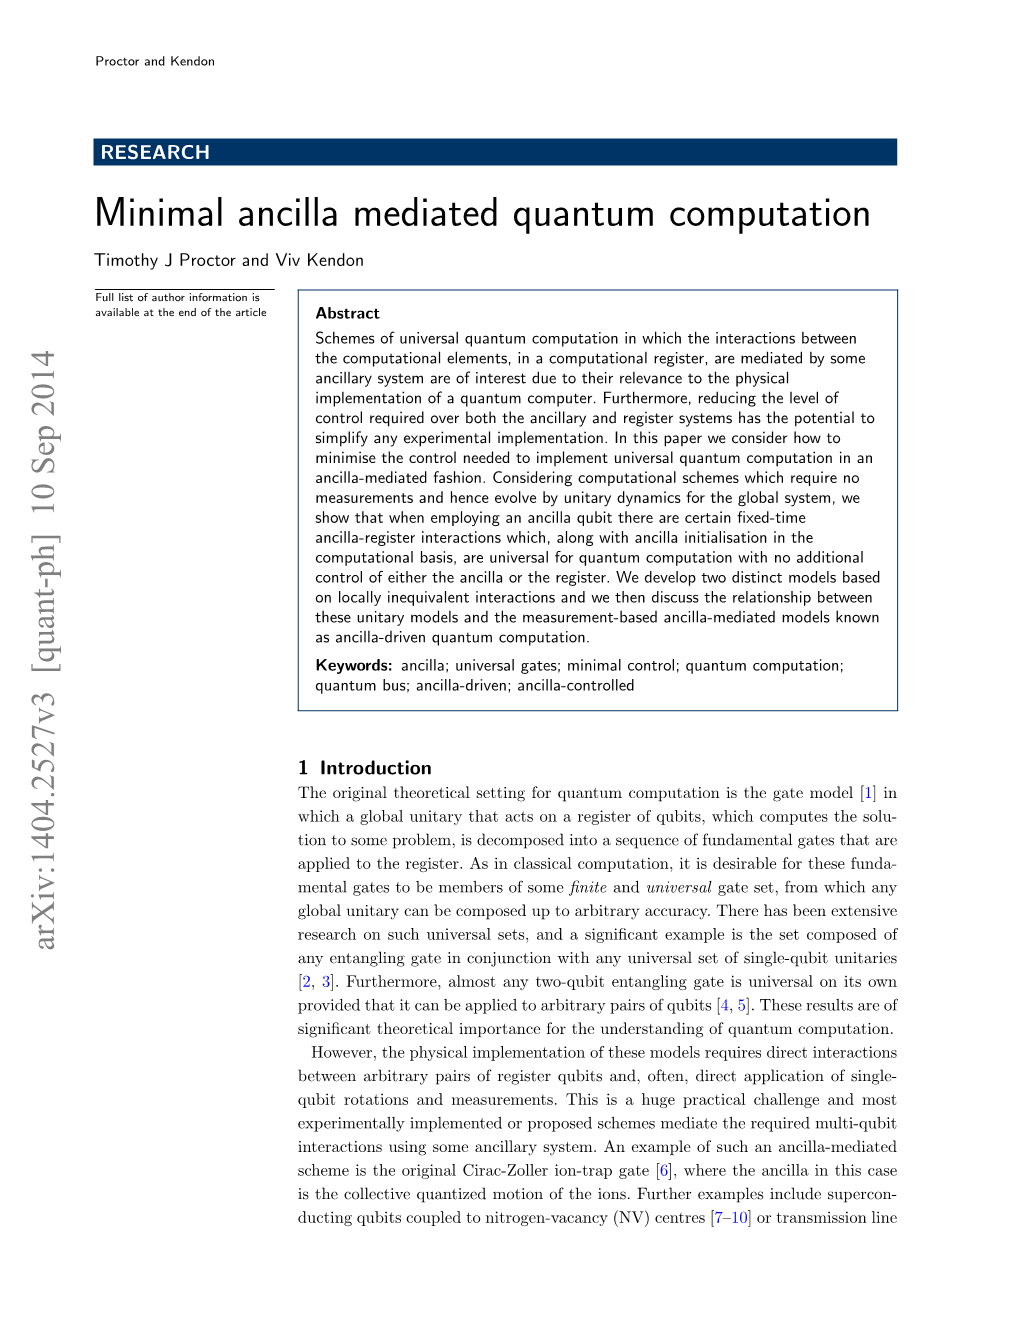 Minimal Ancilla Mediated Quantum Computation Timothy J Proctor and Viv Kendon